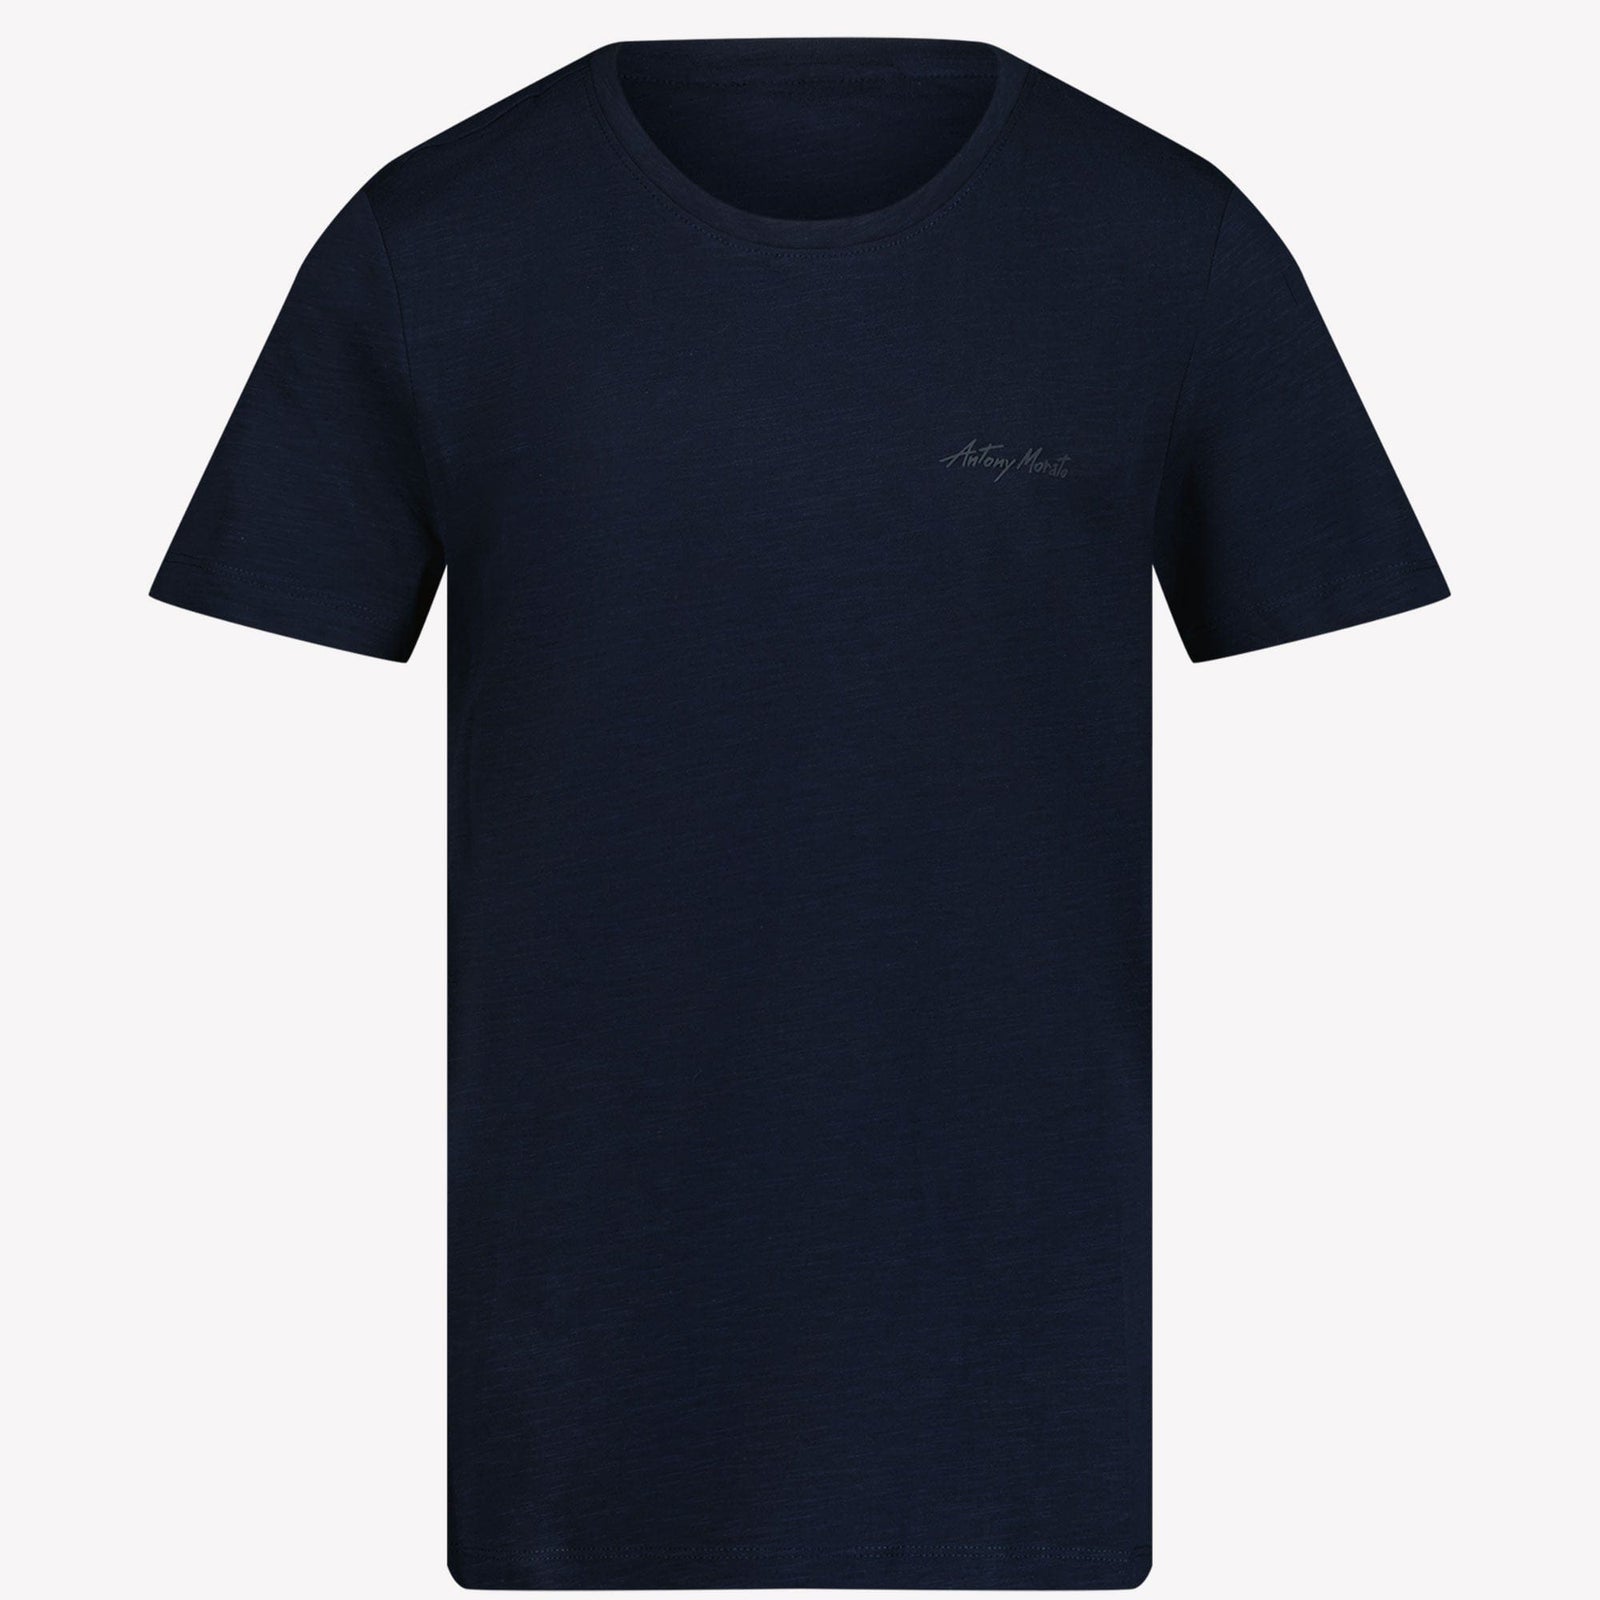 Antony Morato Kinder Jongens T-shirt Navy 4Y